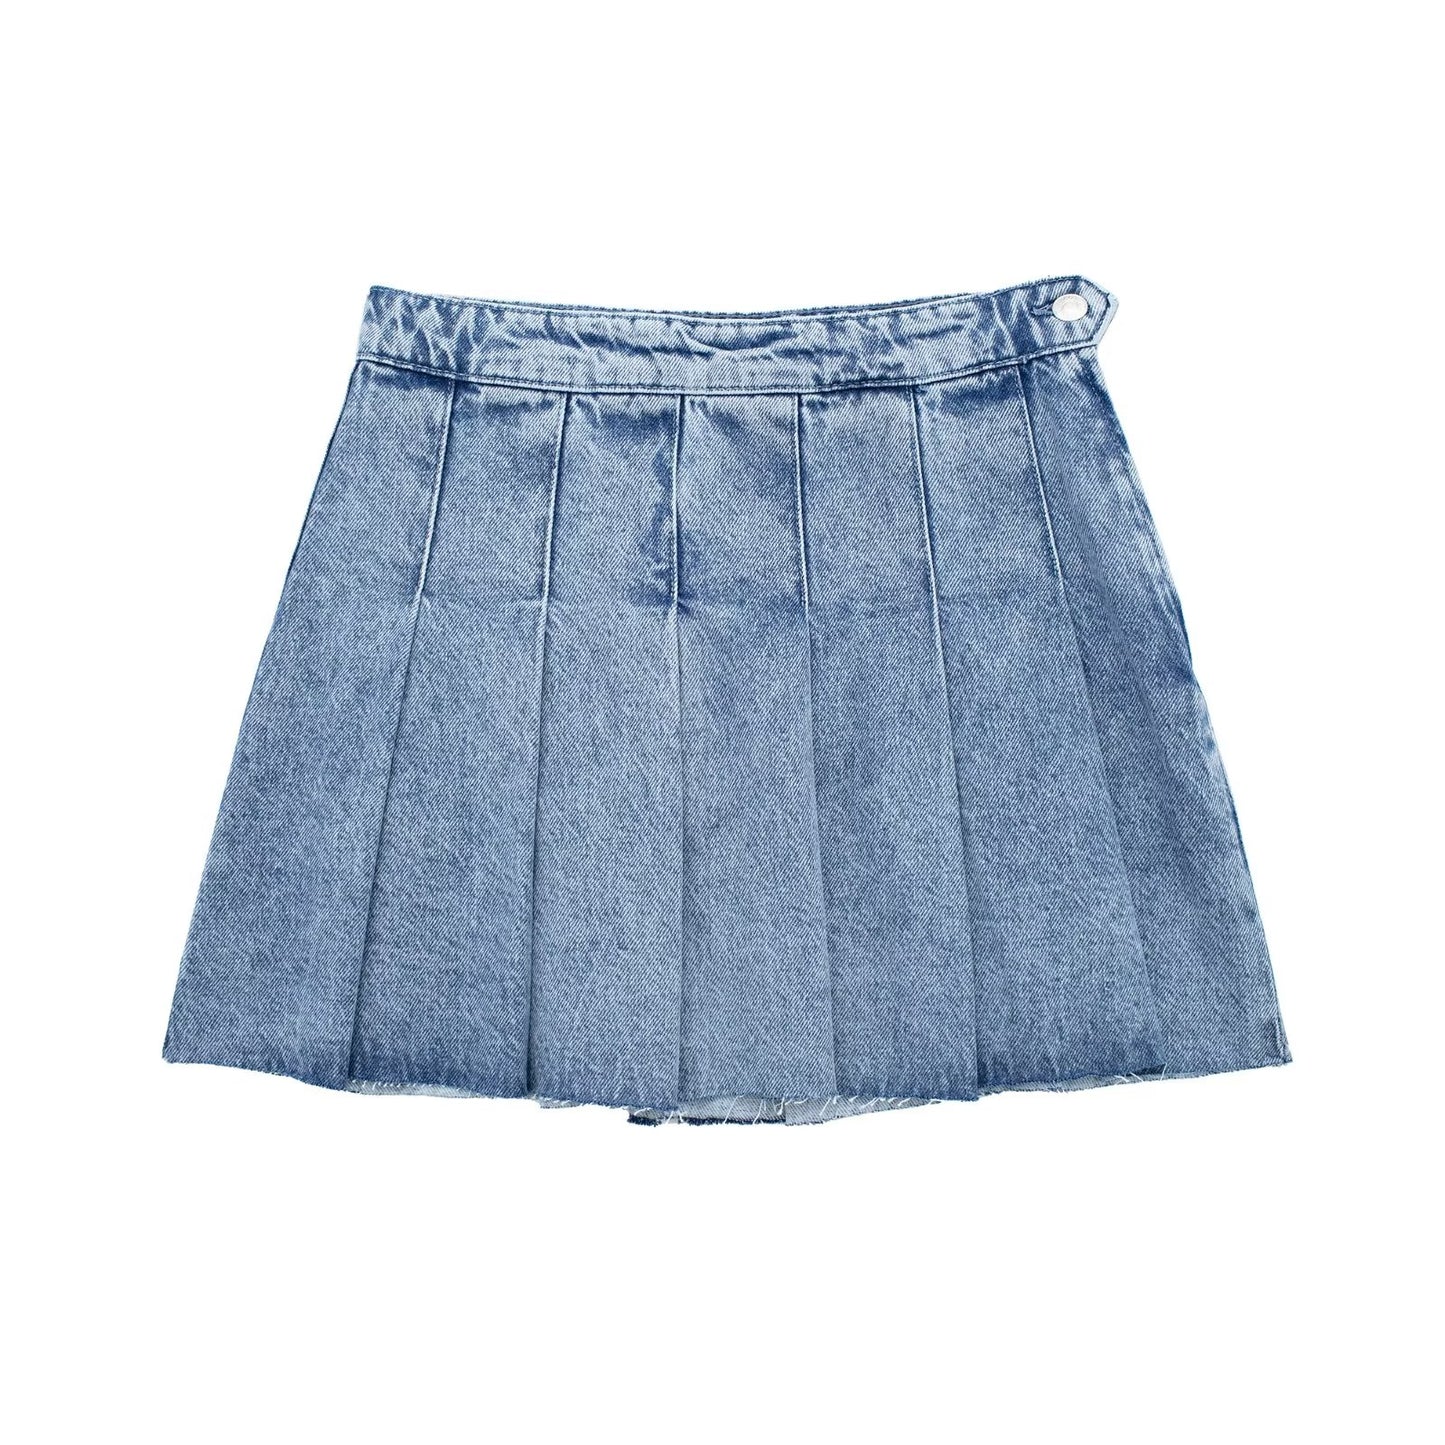 Women's Fashion Wide Pleated Denim Mini Skirt Chic Side Button Zipper Fly - onestopmegamall23